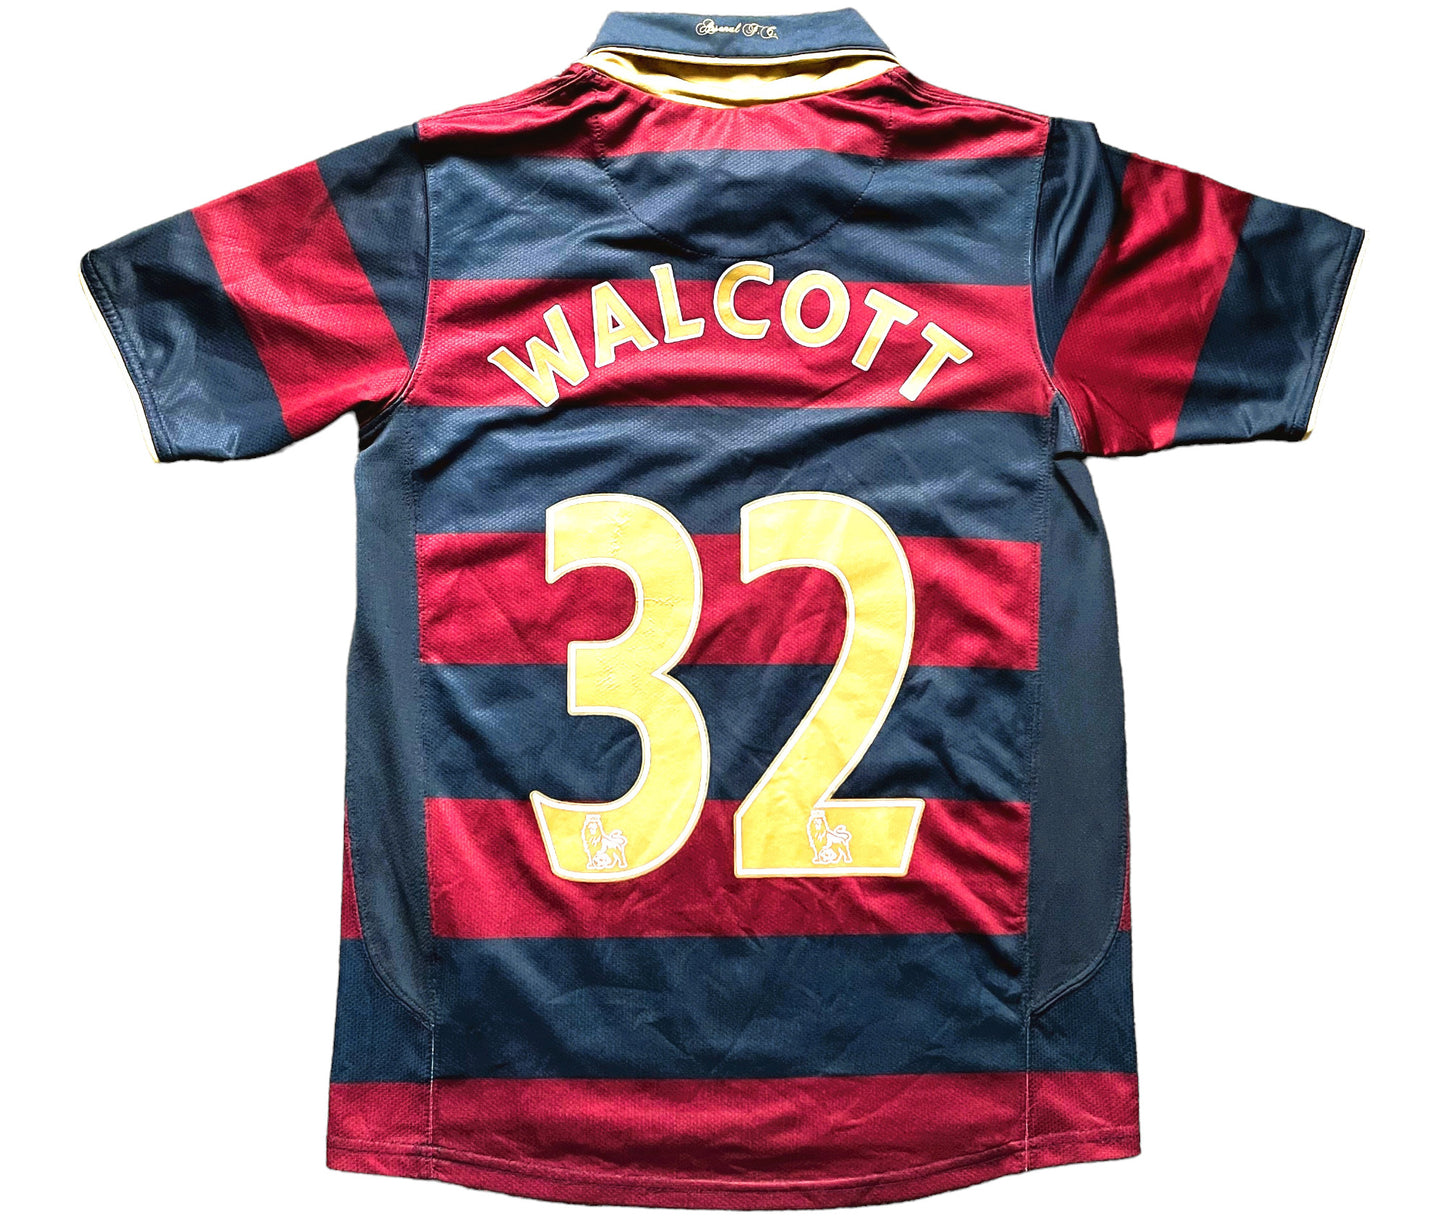 Arsenal 2007 Third Shirt WALCOTT 32 (very good) AdultsXS/Youths